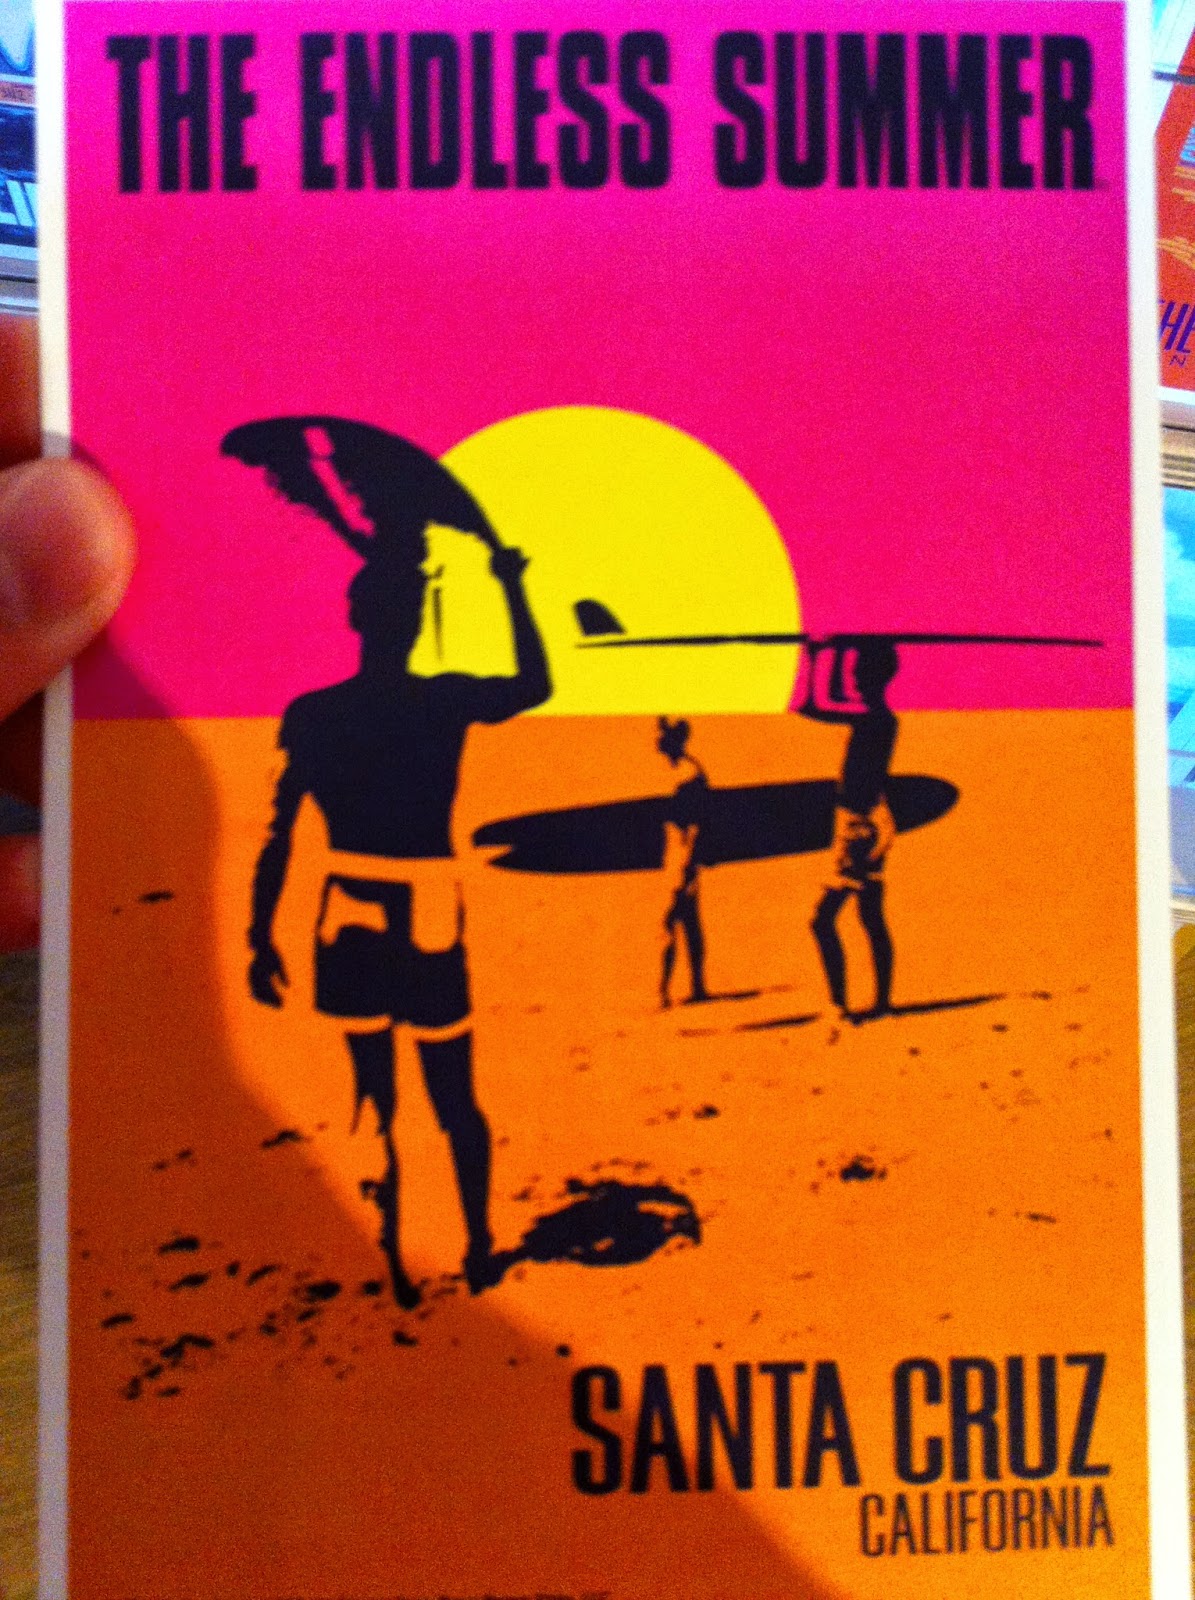 Postcard 1 from Santa Cruz